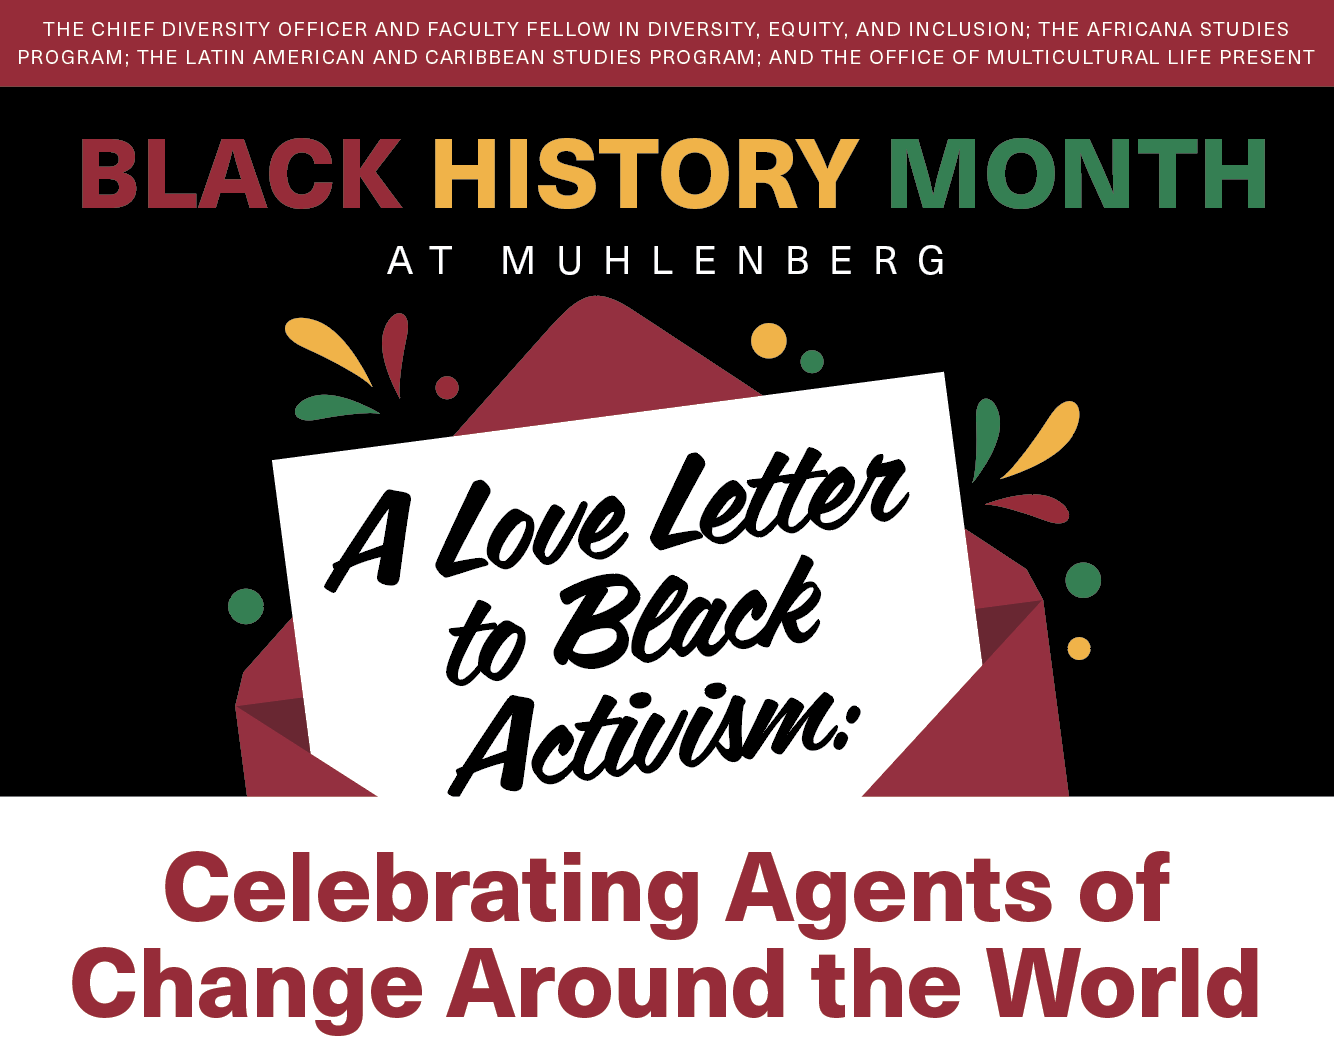 A Love Letter to Black Activism